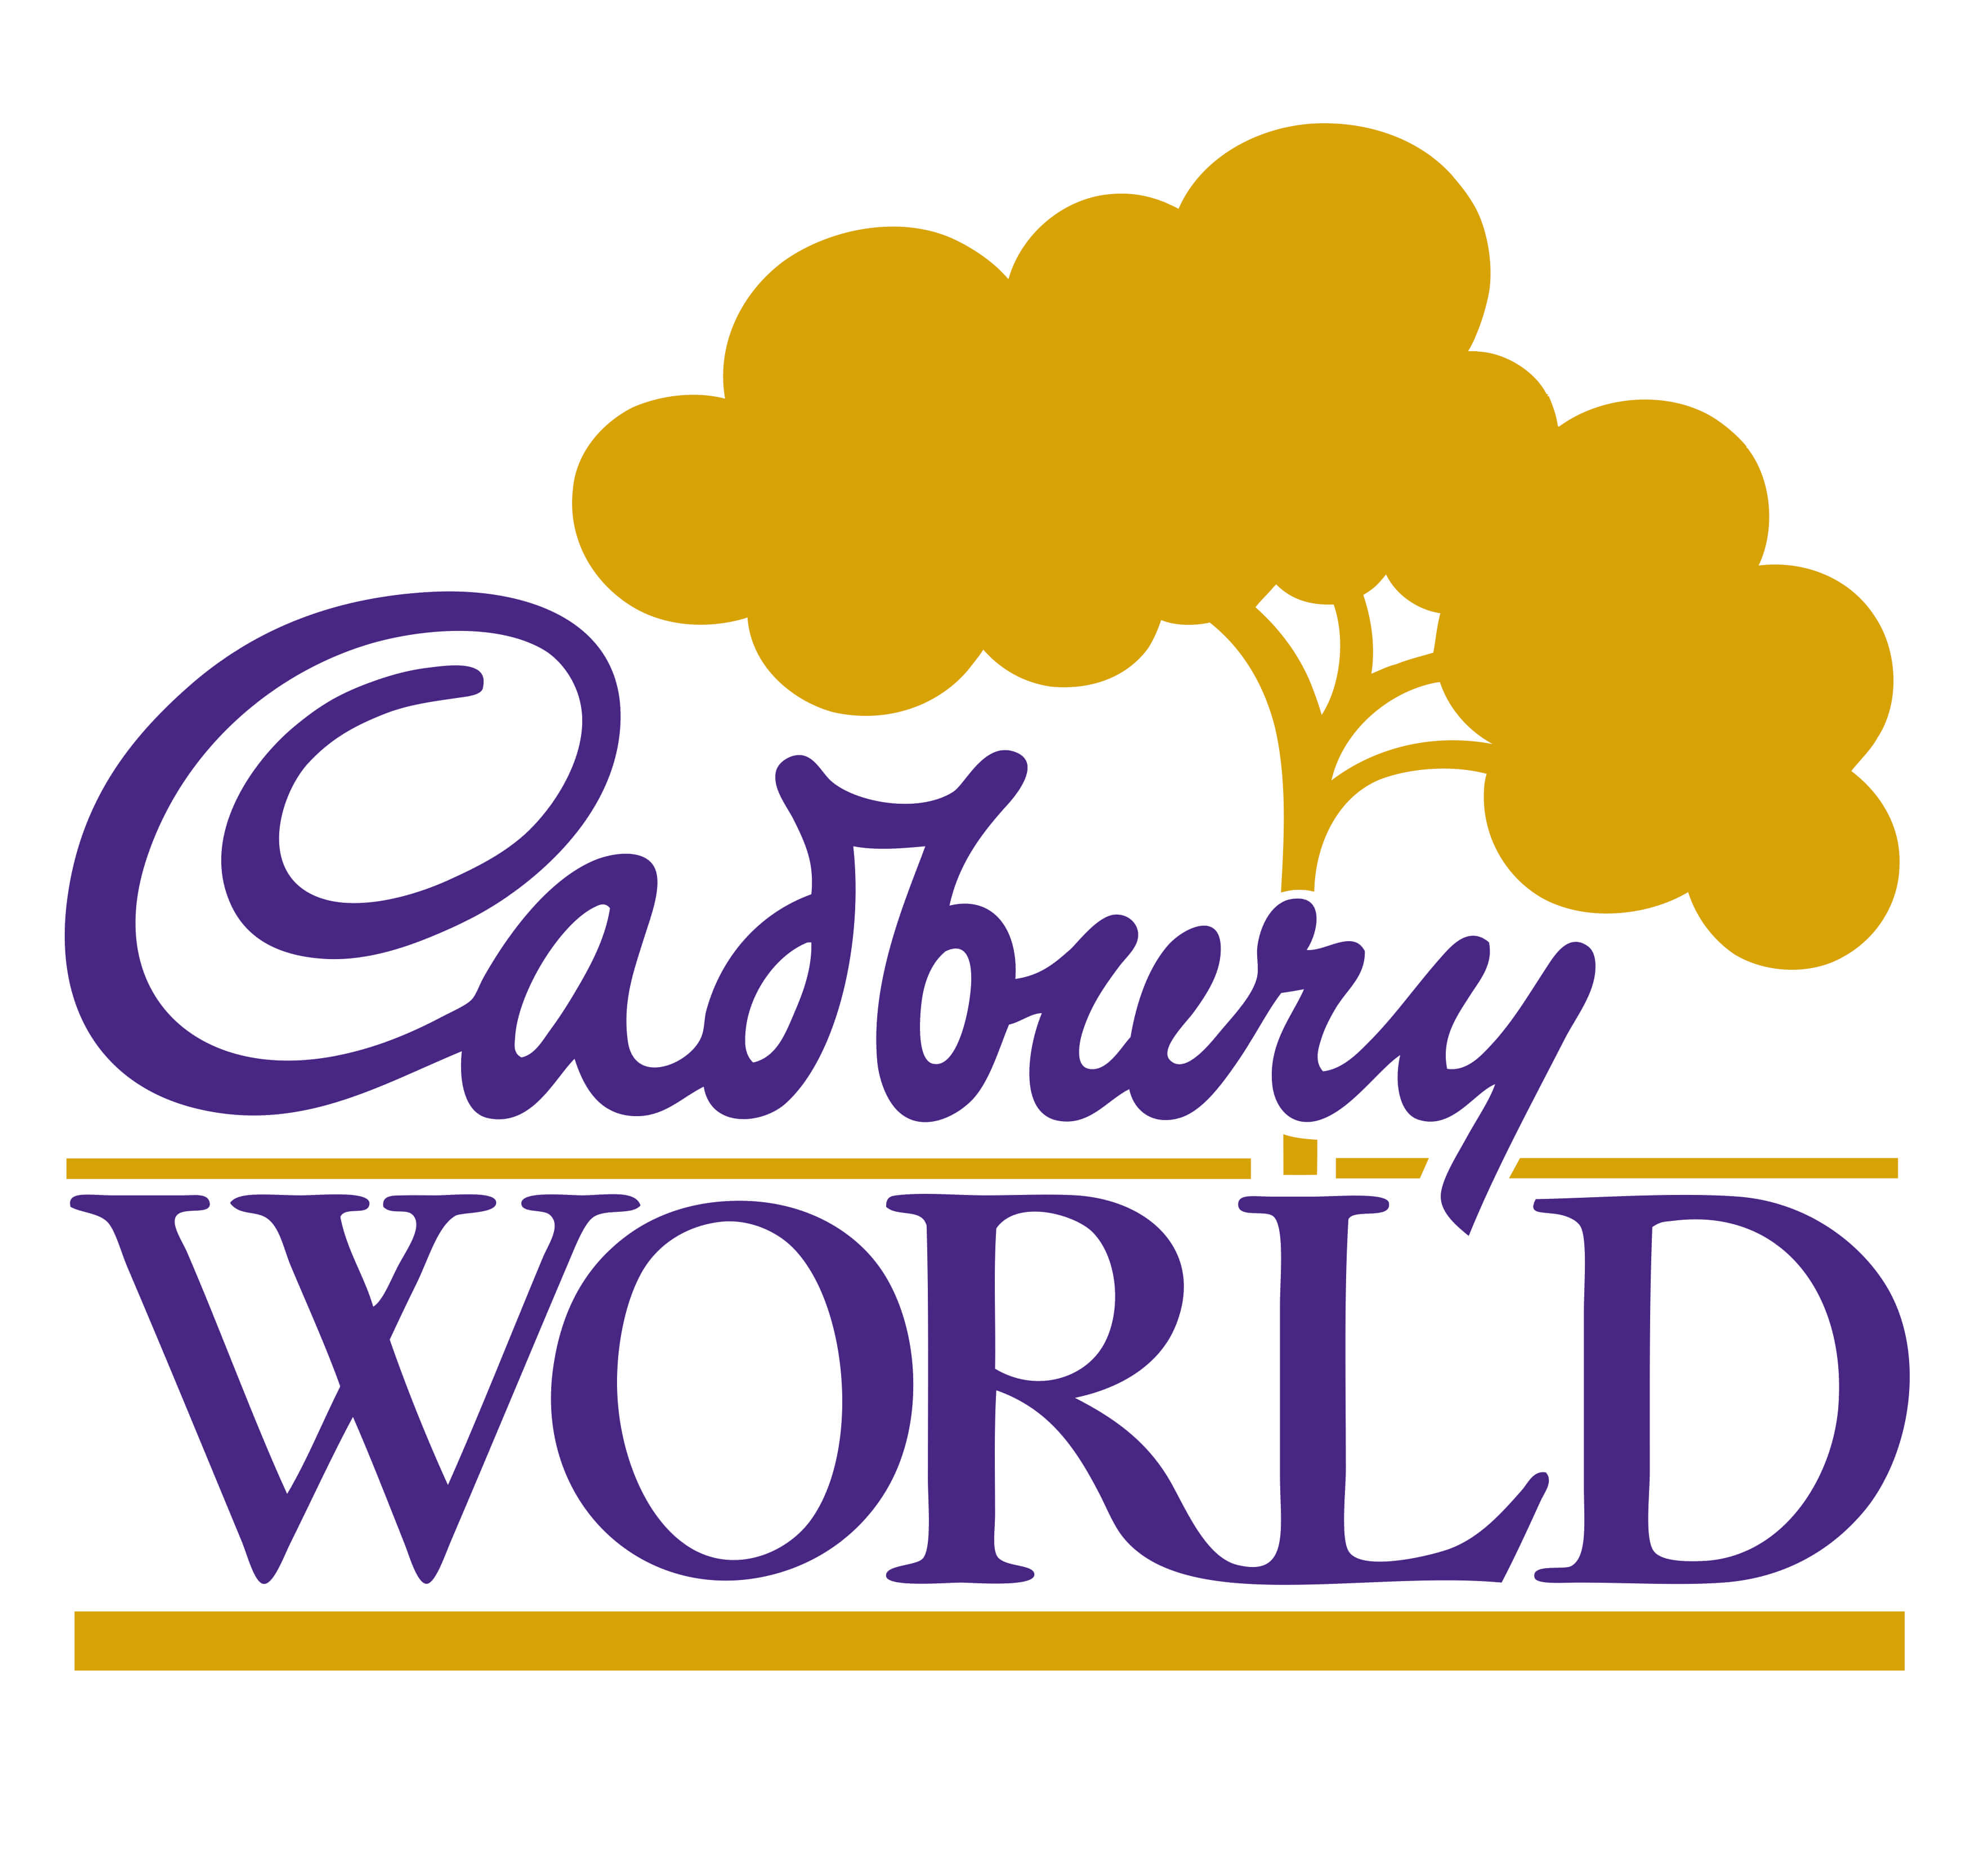 Cadbury World.jpg